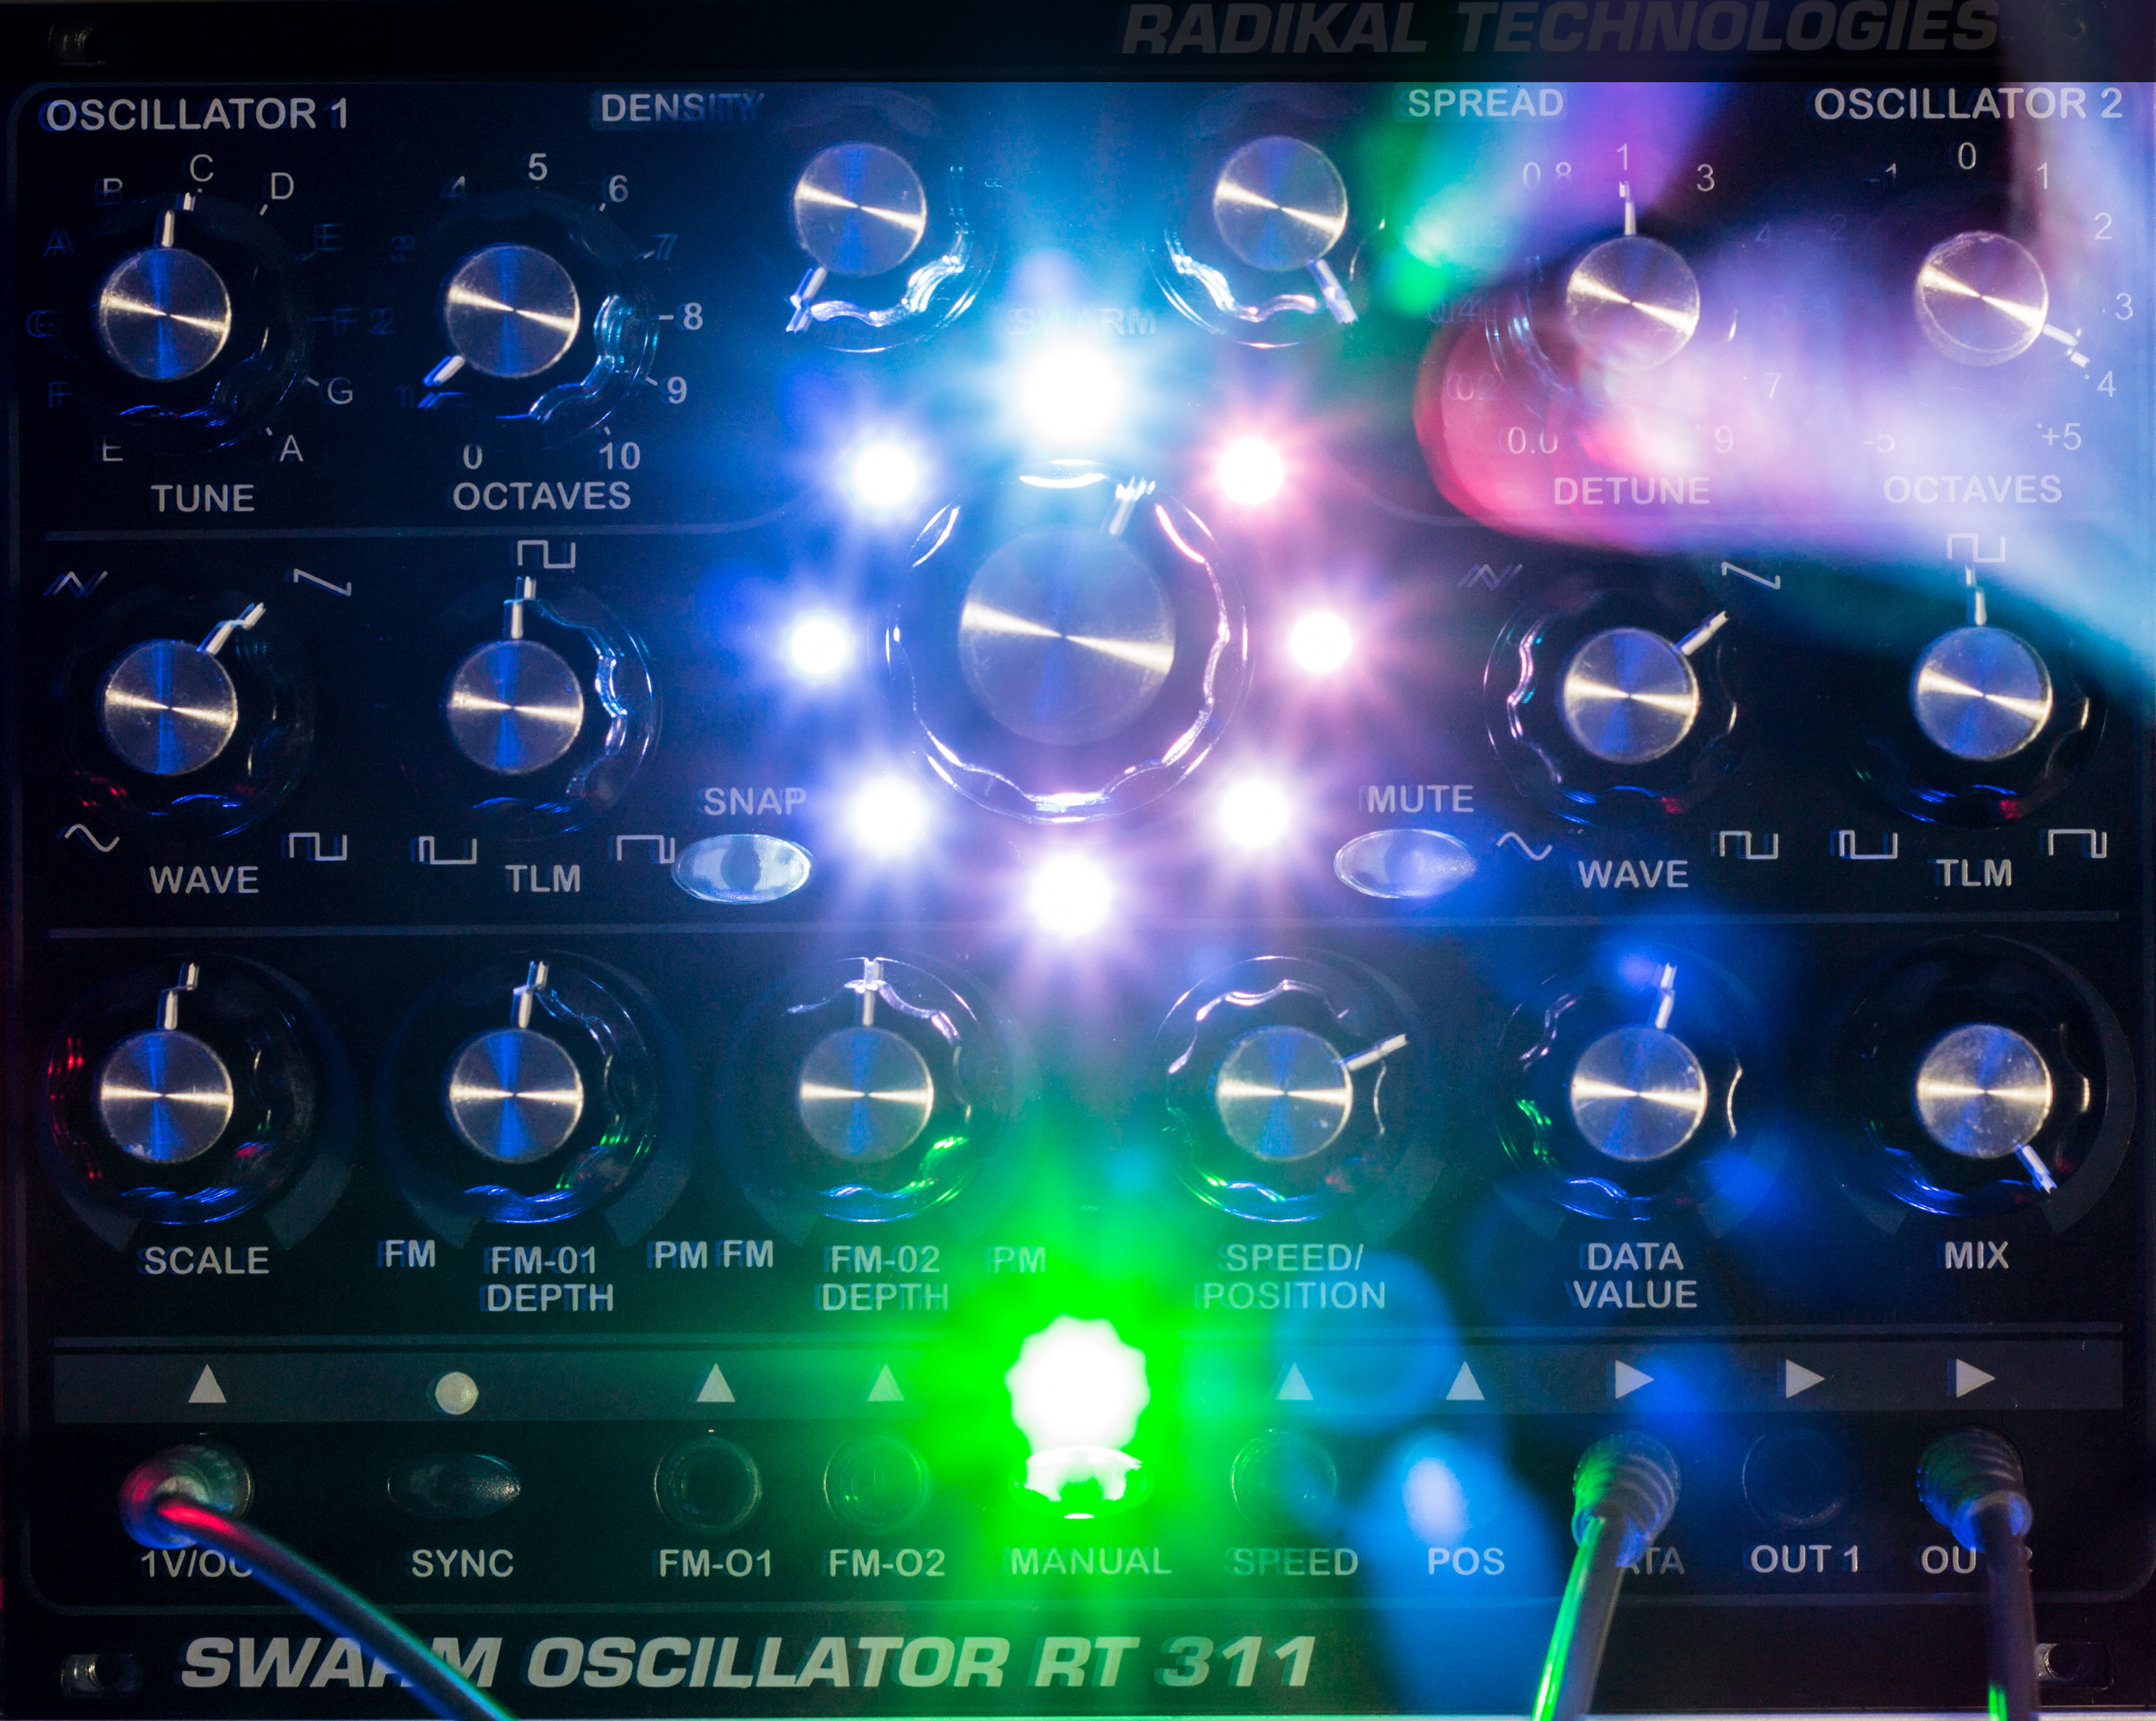 Radikal Technologies RT-311 Swarm Oscillator on LSD